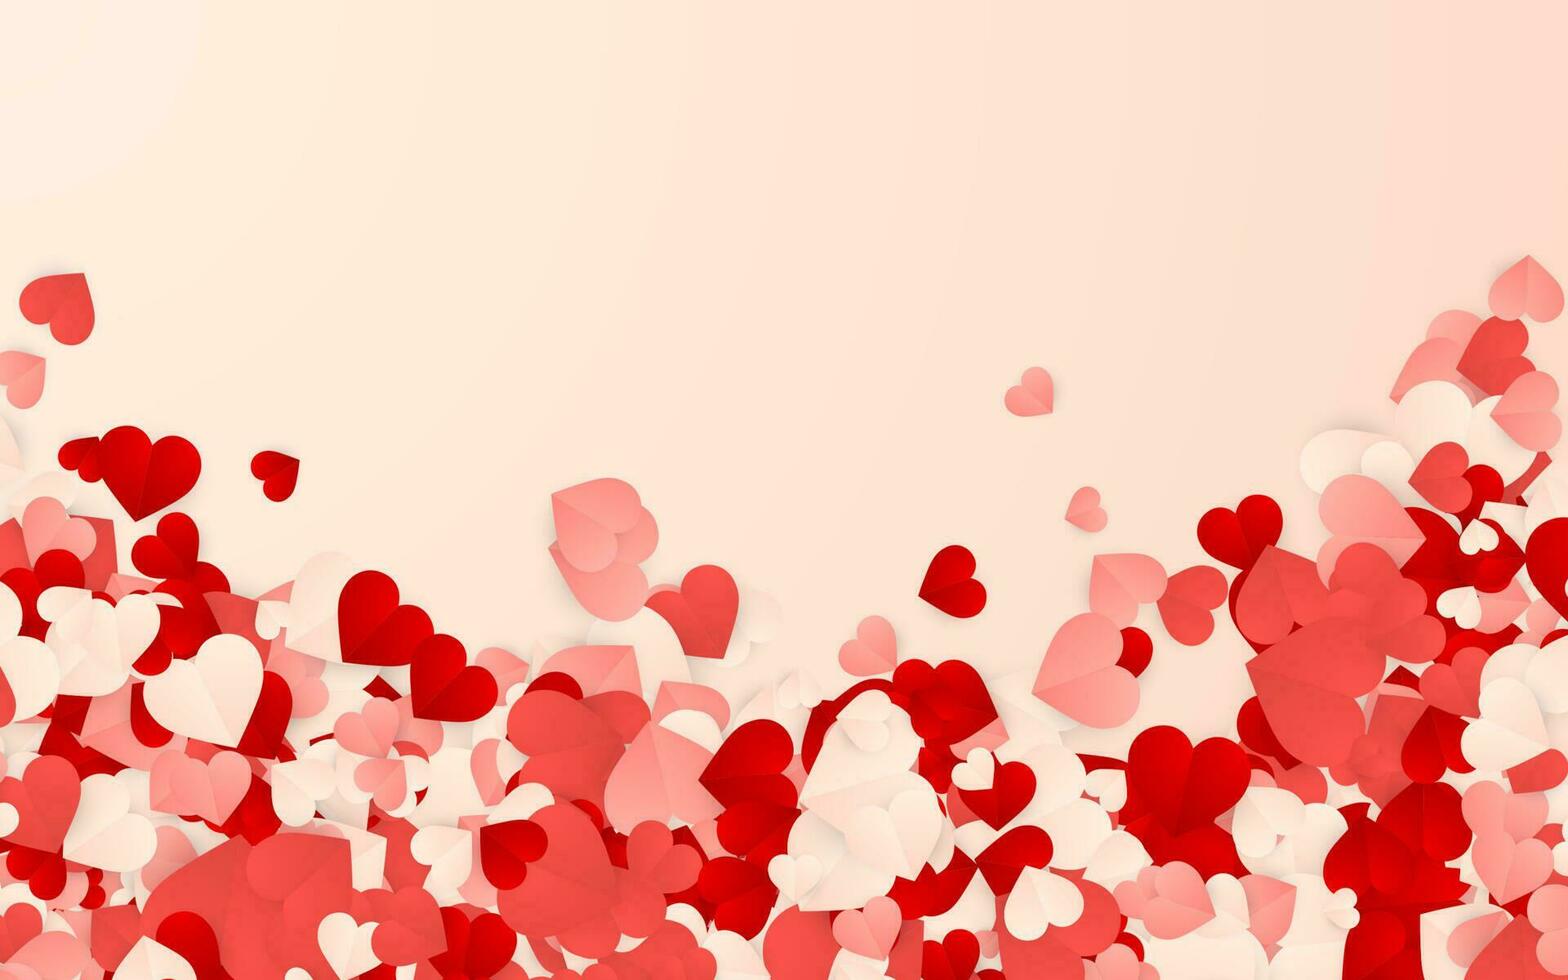 gelukkig valentijnsdag dag achtergrond, papier rood, roze en wit harten confetti. vector illustratie